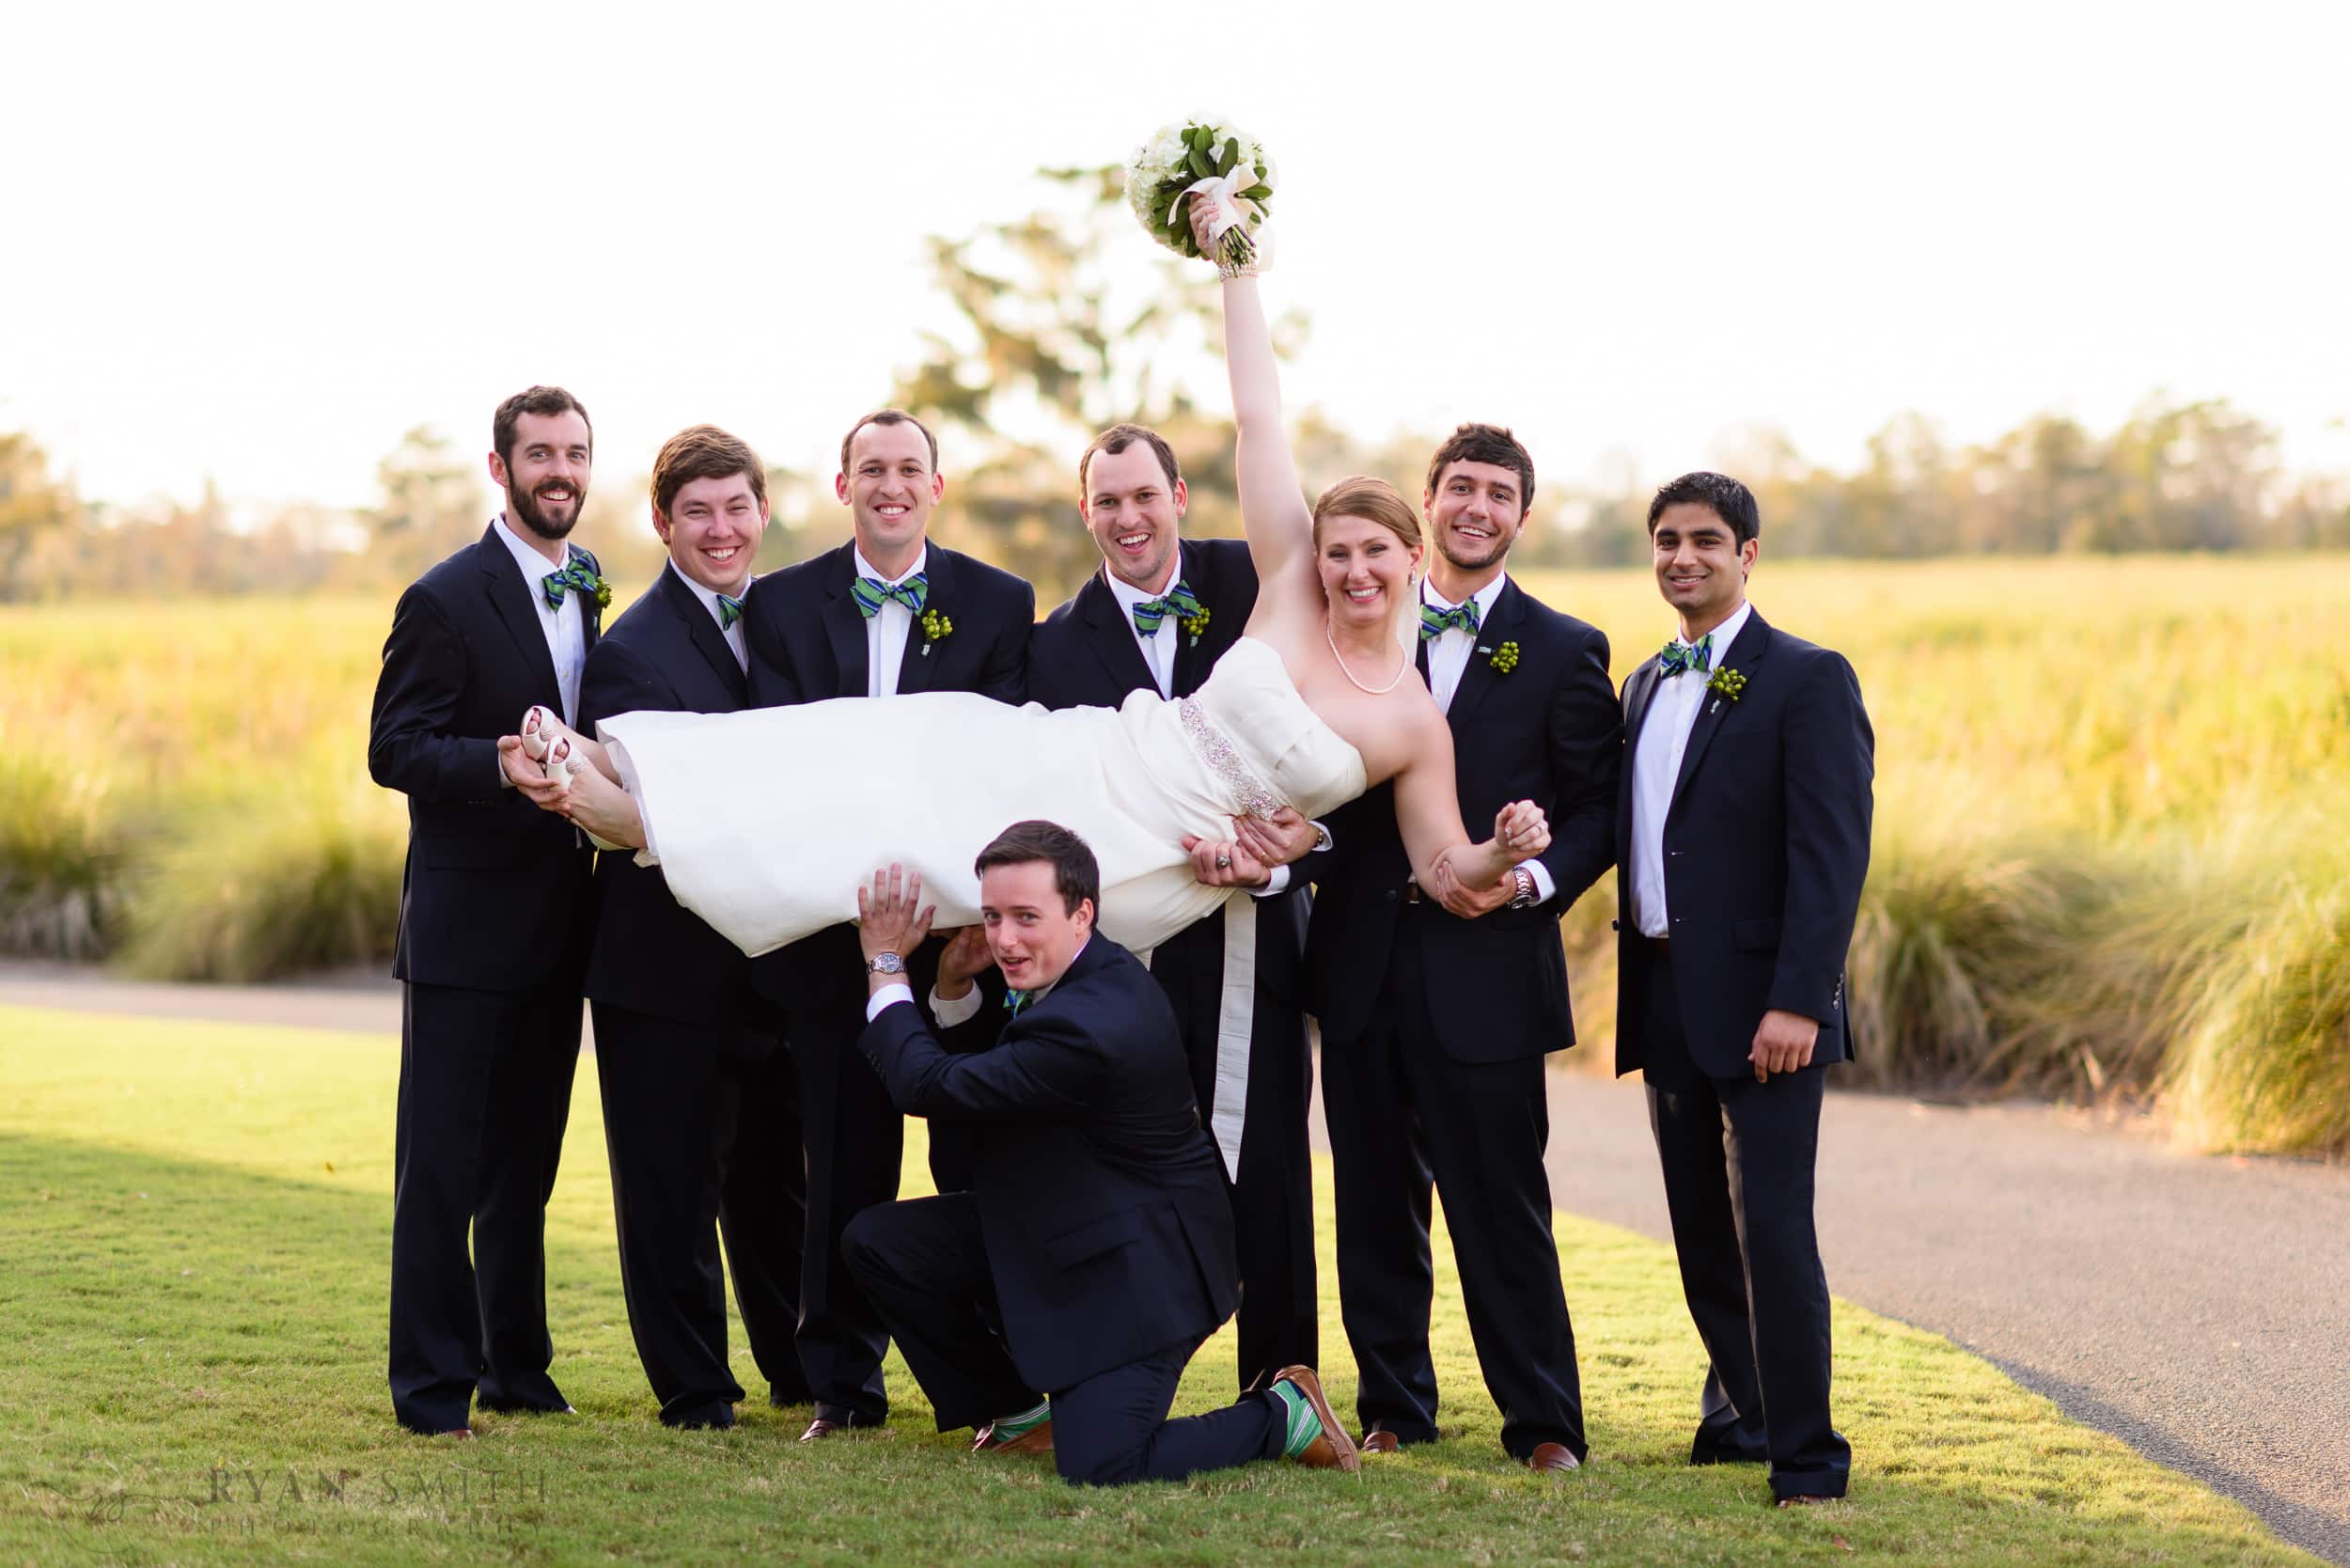 Groomsmen lifting bride into the air - Heritage Golf Club